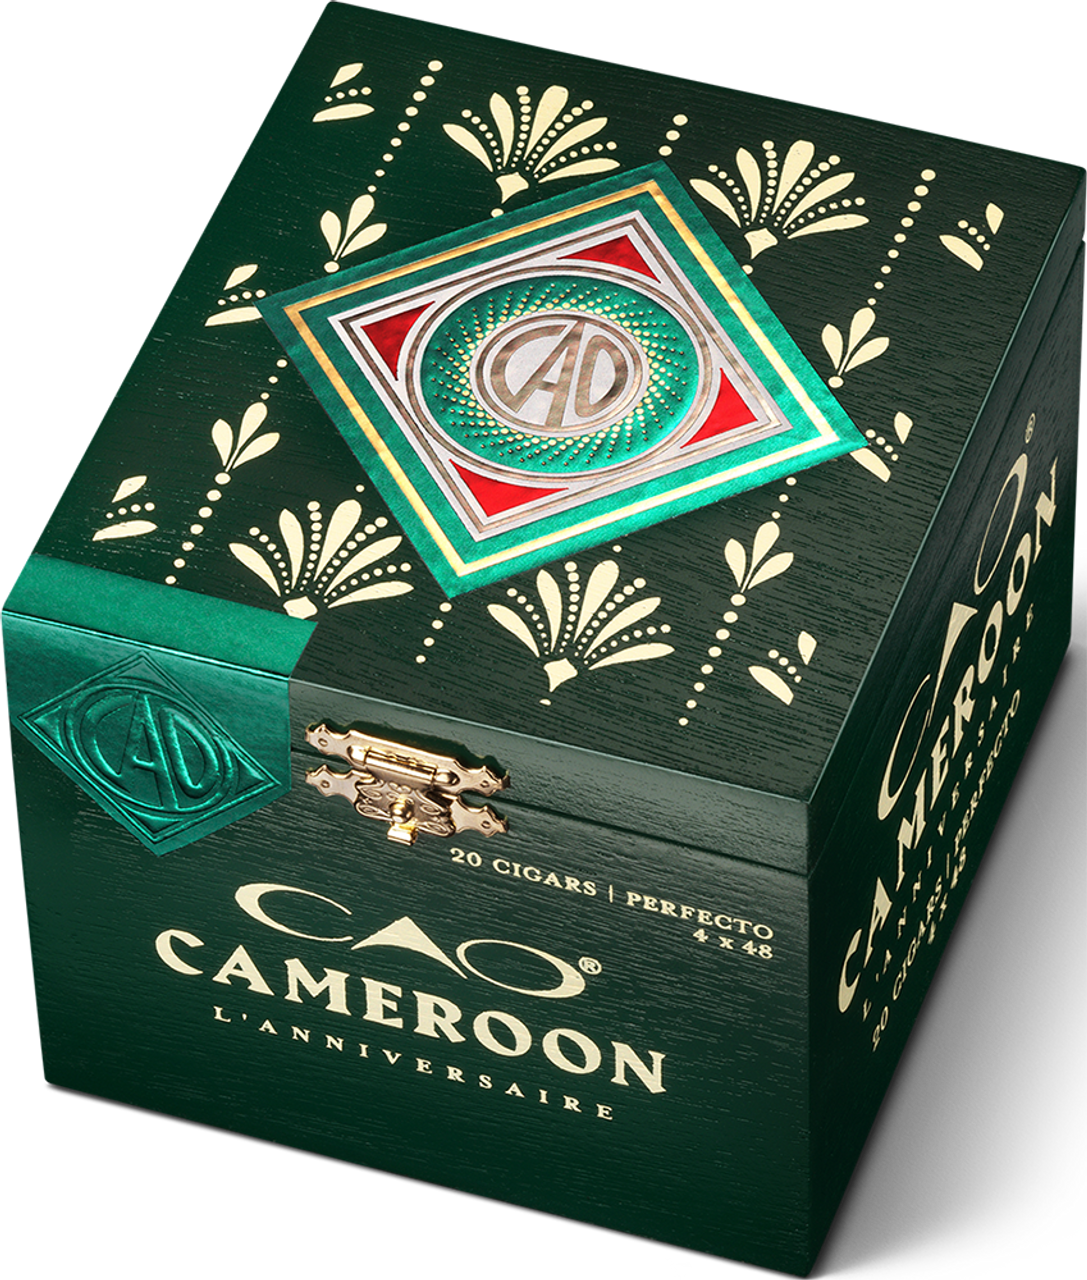 CAO Cameroon Perfecto 4x48